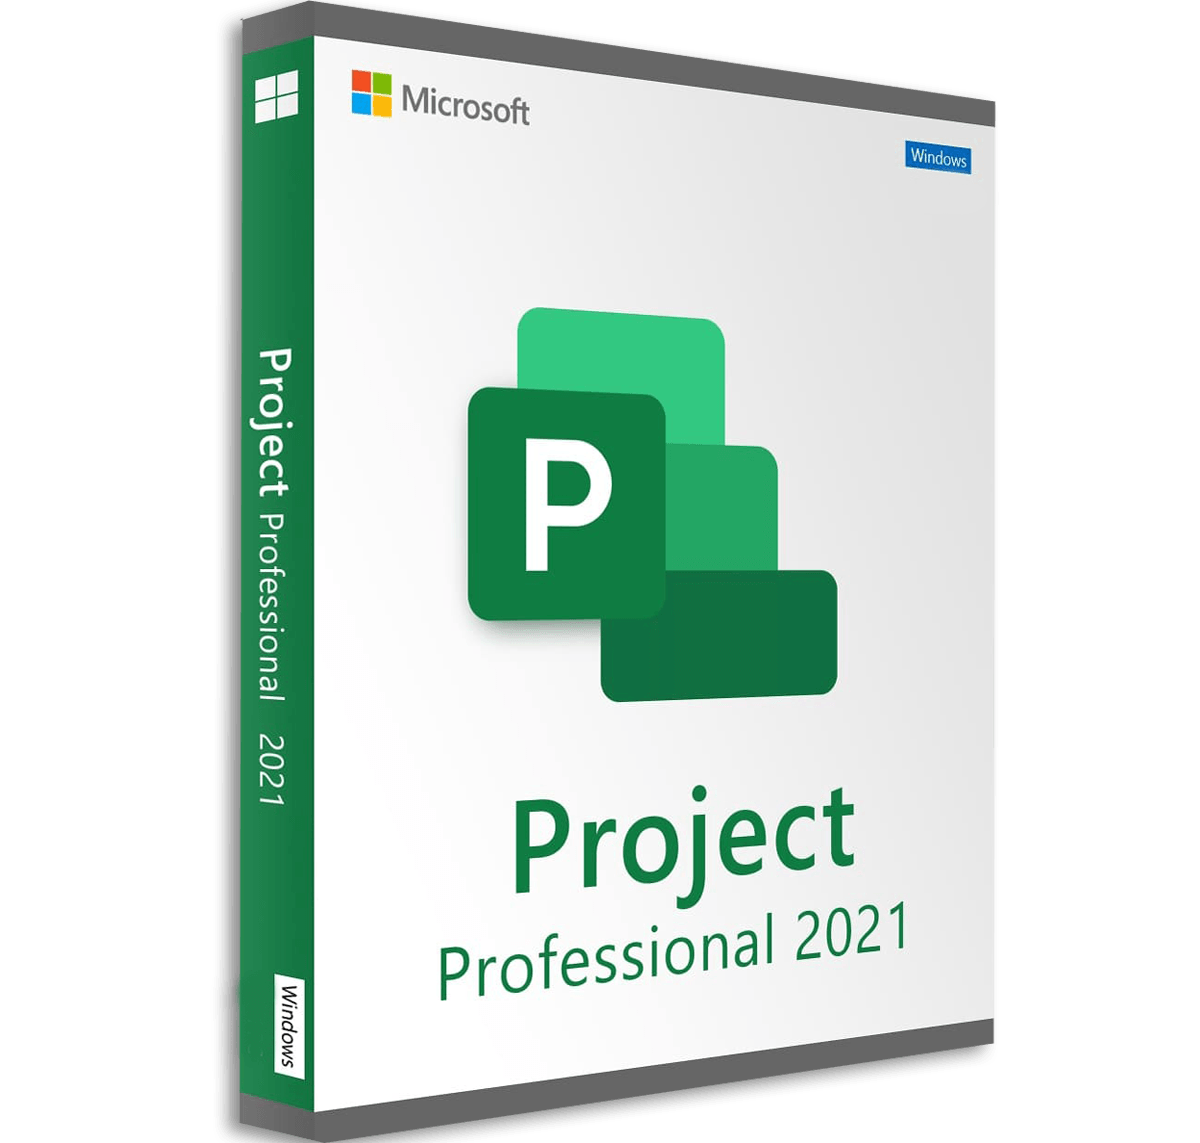 Original Microsoft Project Activation Key Permanent